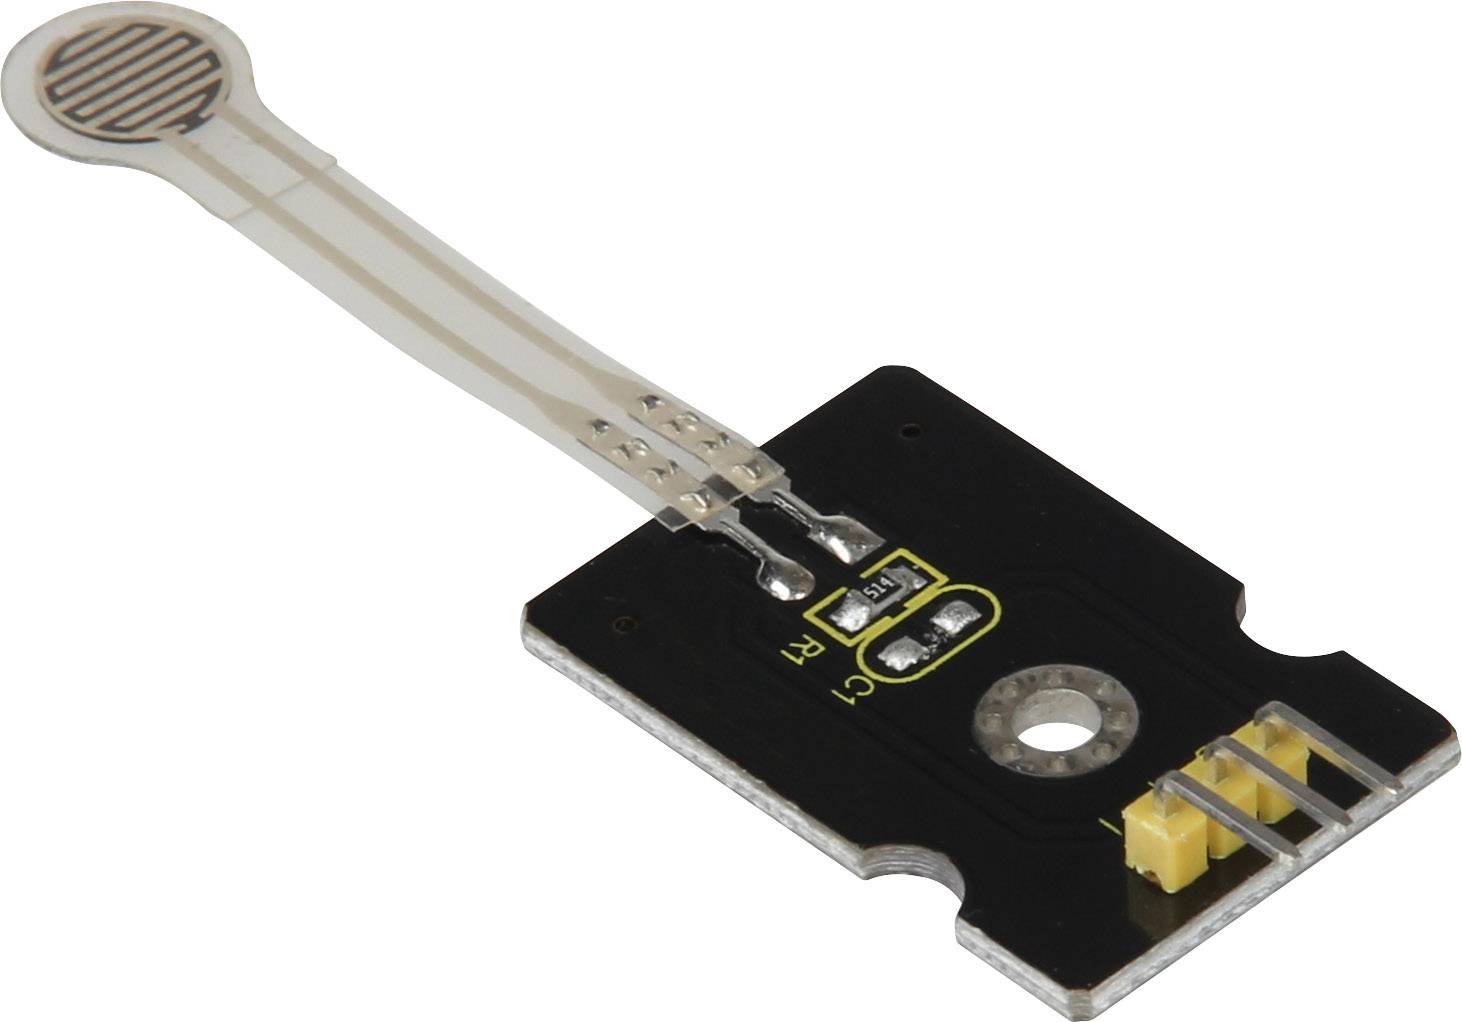 JOY-IT SEN-Pressure20 Berührungs-Sensor 1 St. Passend für: Arduino, Raspberry Pi, micro:bit